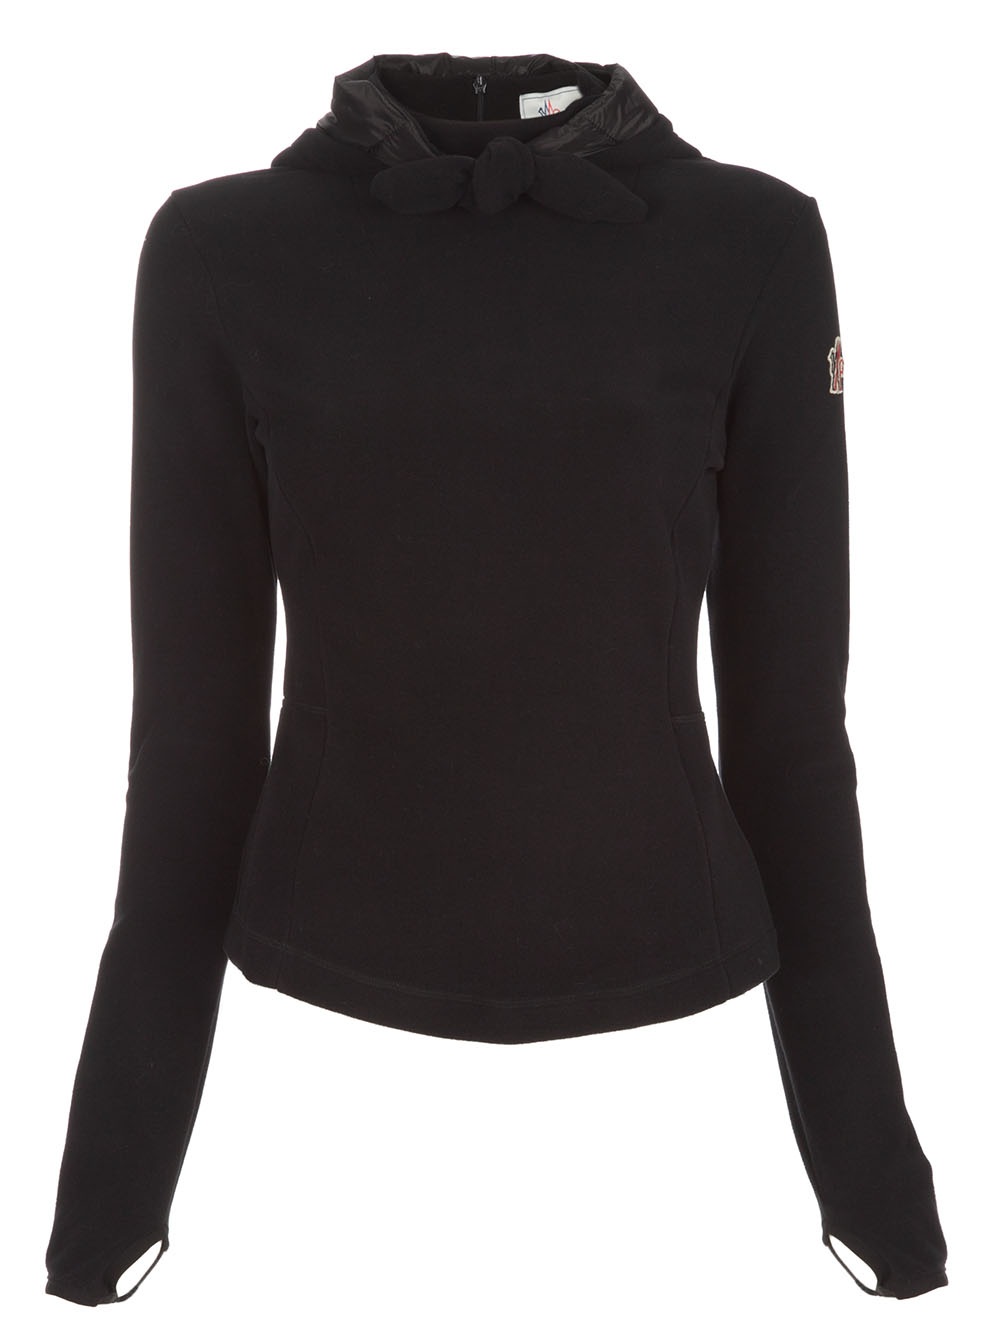 Moncler Grenoble Fleece Sweater in Black | Lyst